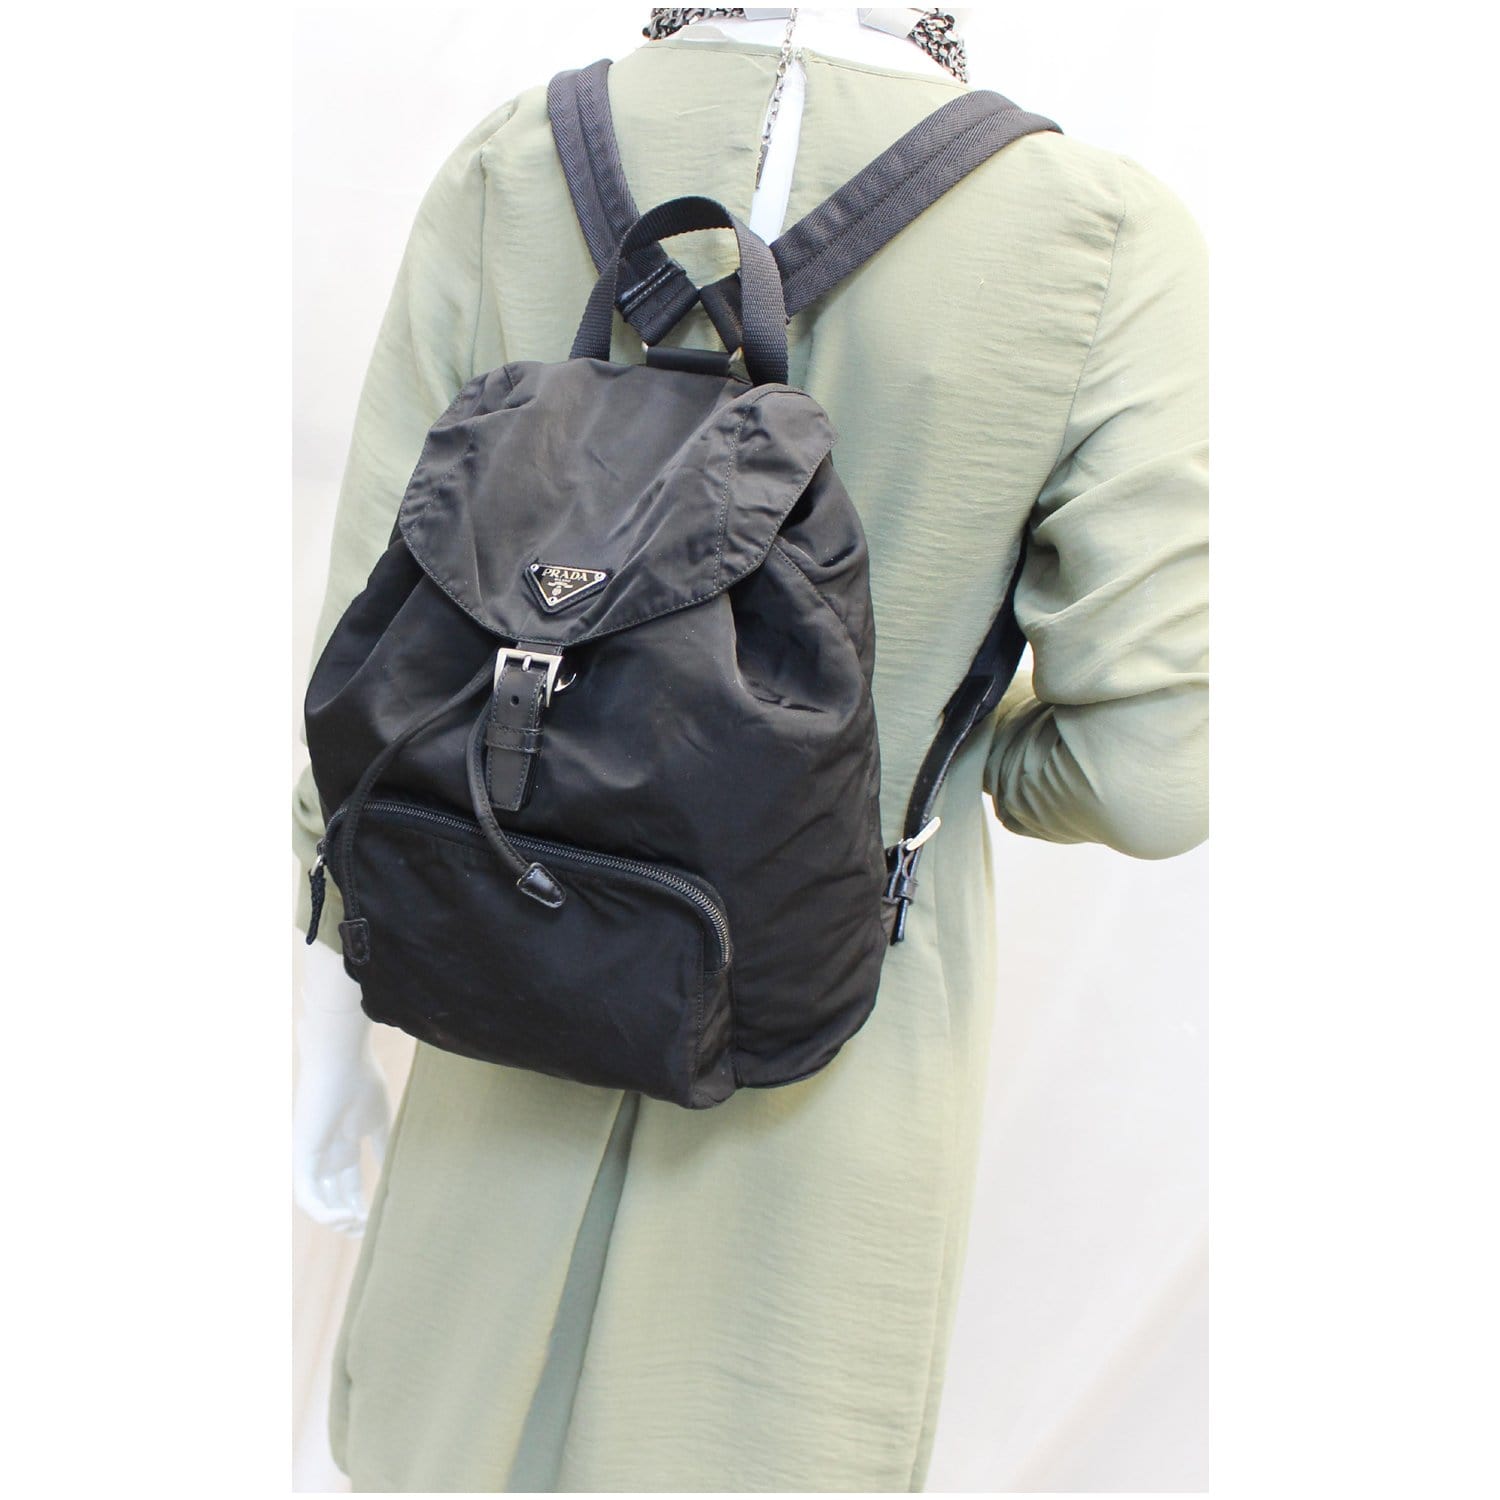 prada nylon backpack large